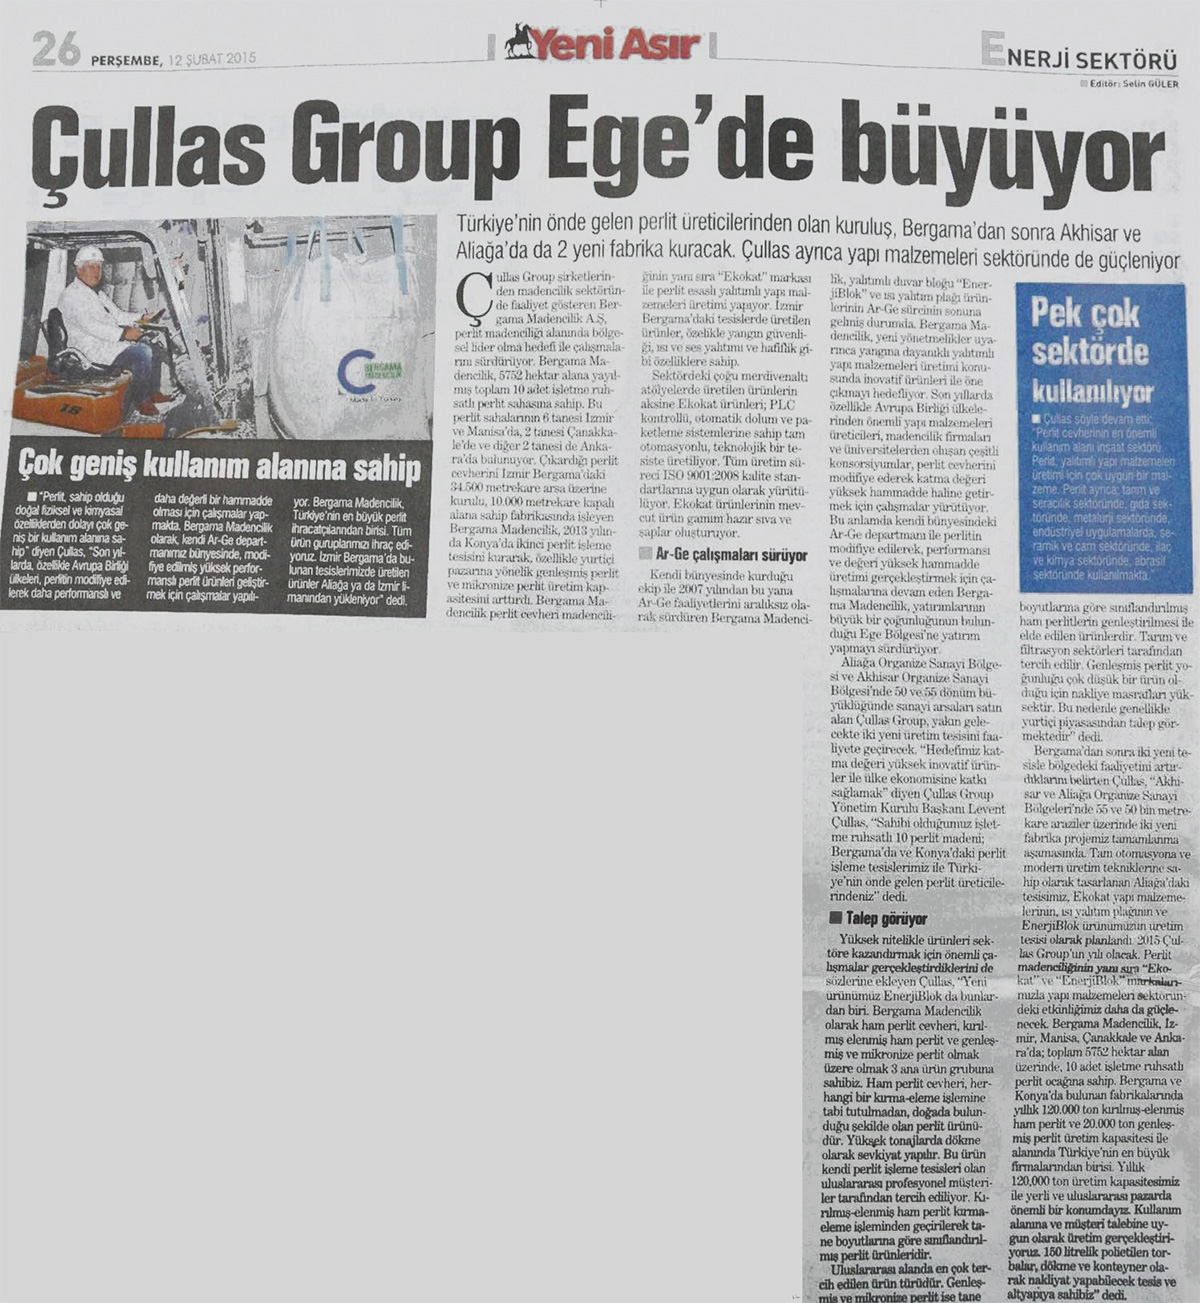 Çullas Group is Growing in Aegean Region